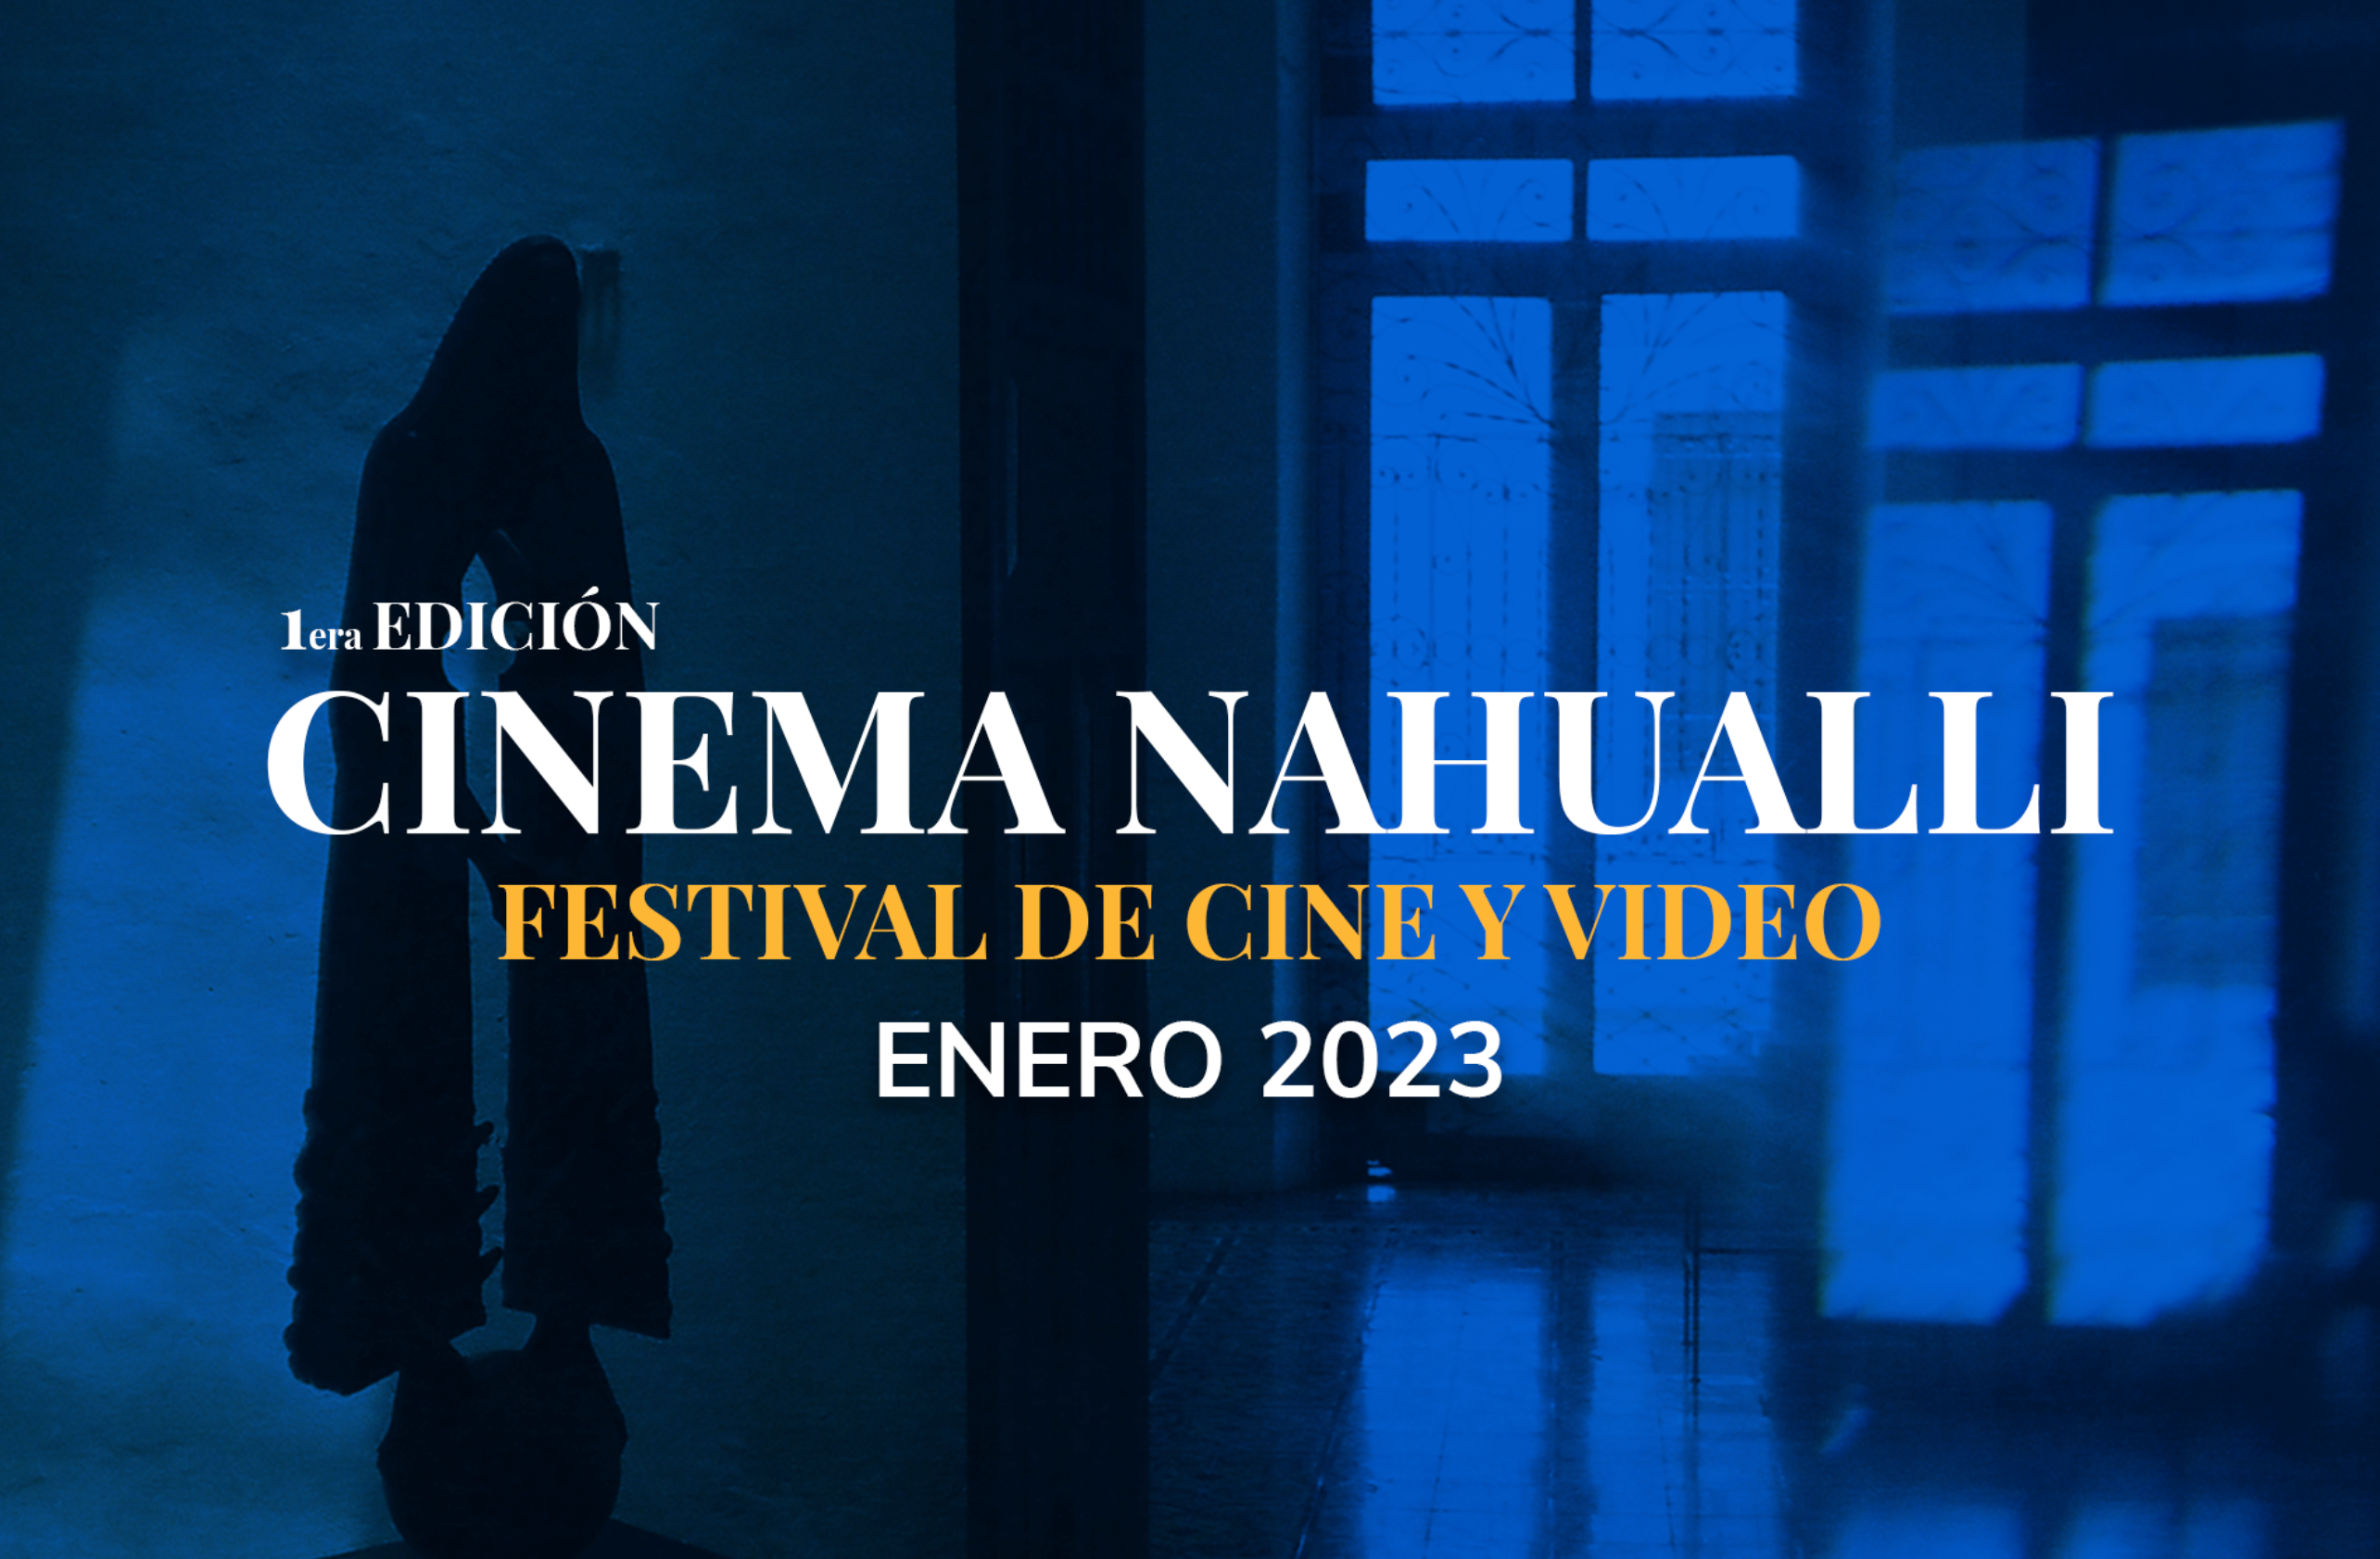 Cinema Nahualli: Festival de Cine y Video